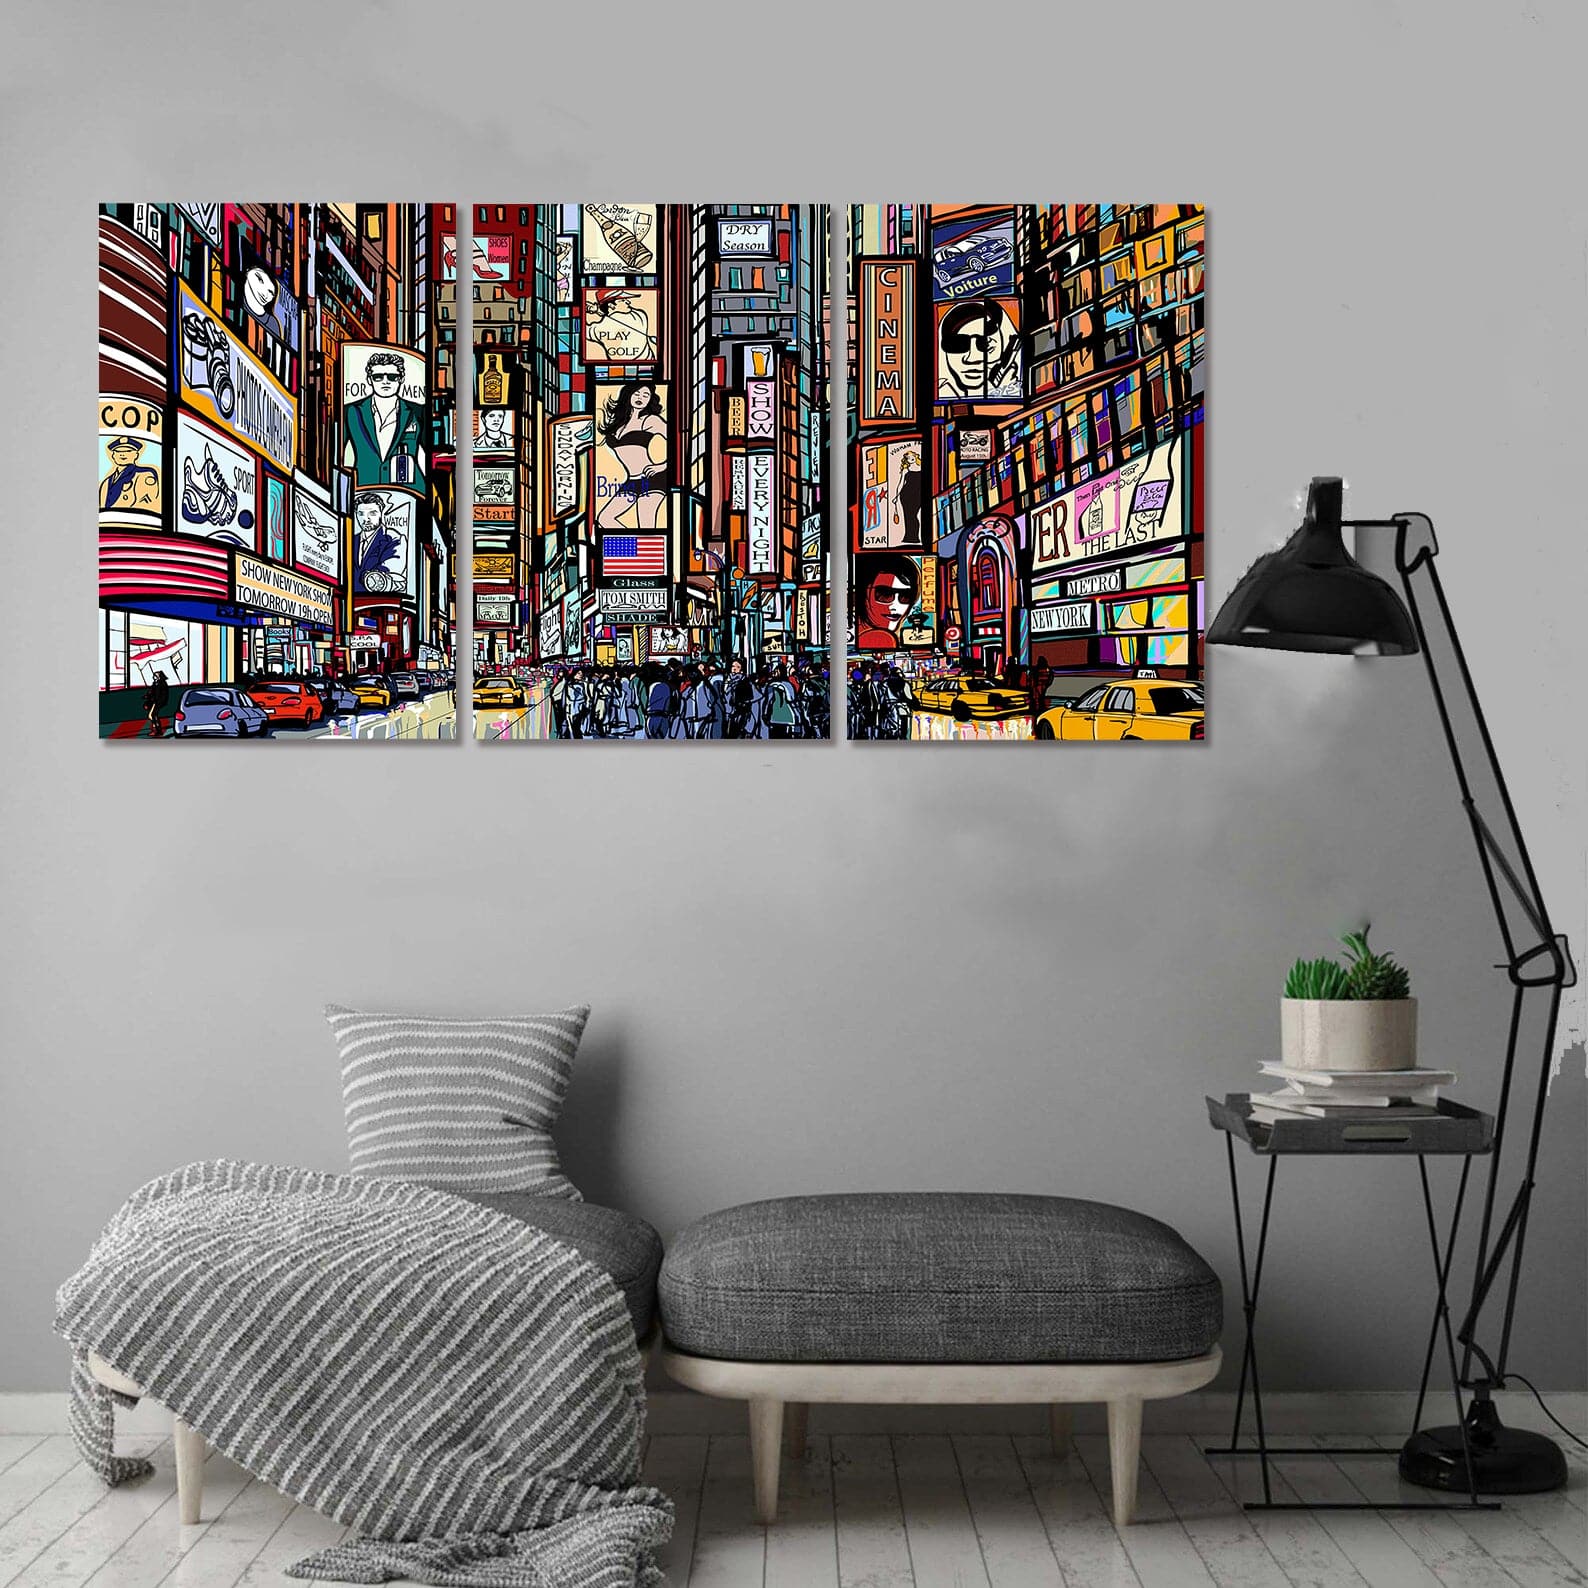 Framed Mutipul Panels - New York City